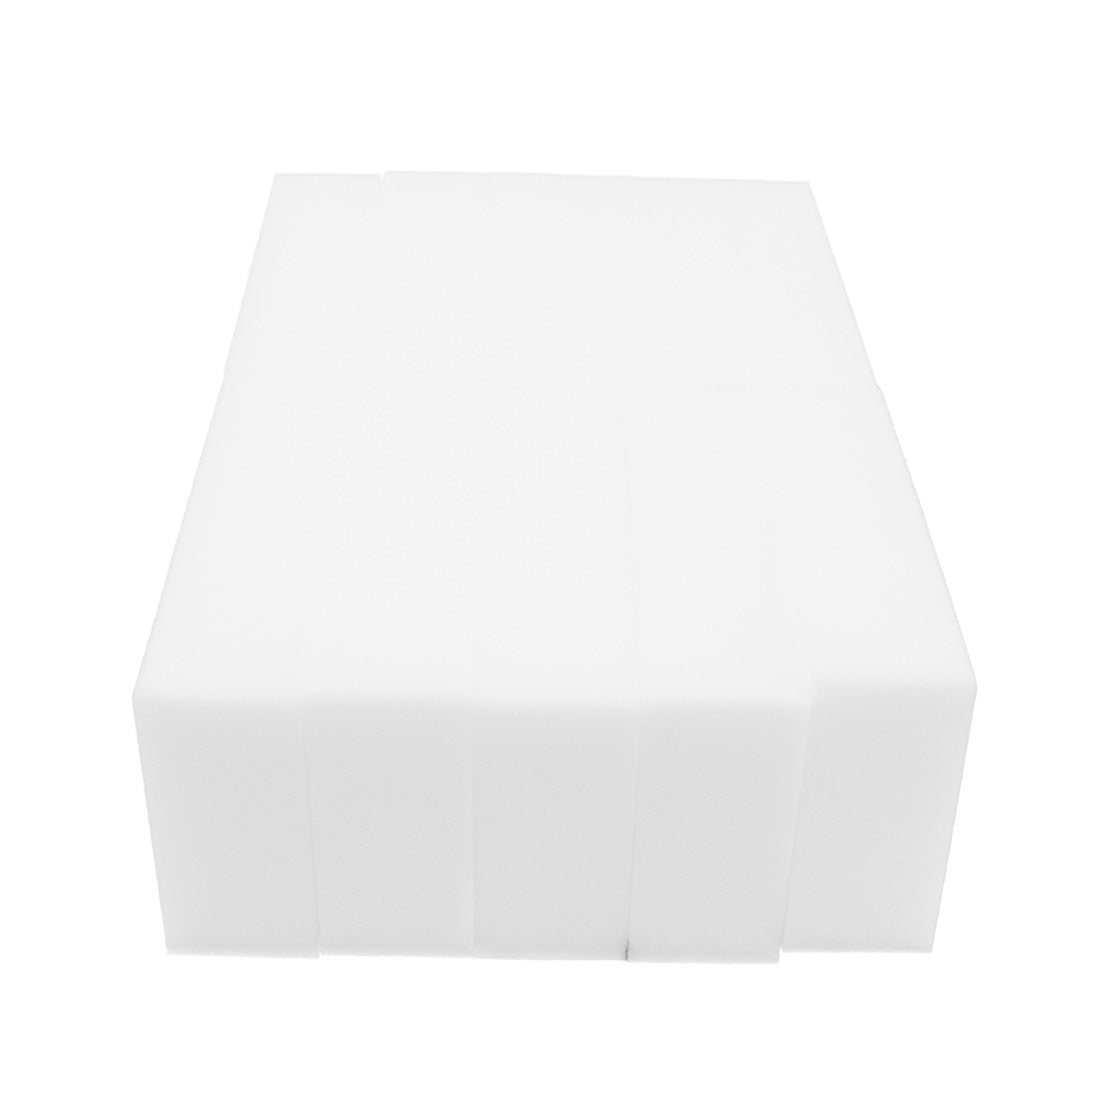 Magic Foam Eraser Sponge 5 pack Top Oblique View